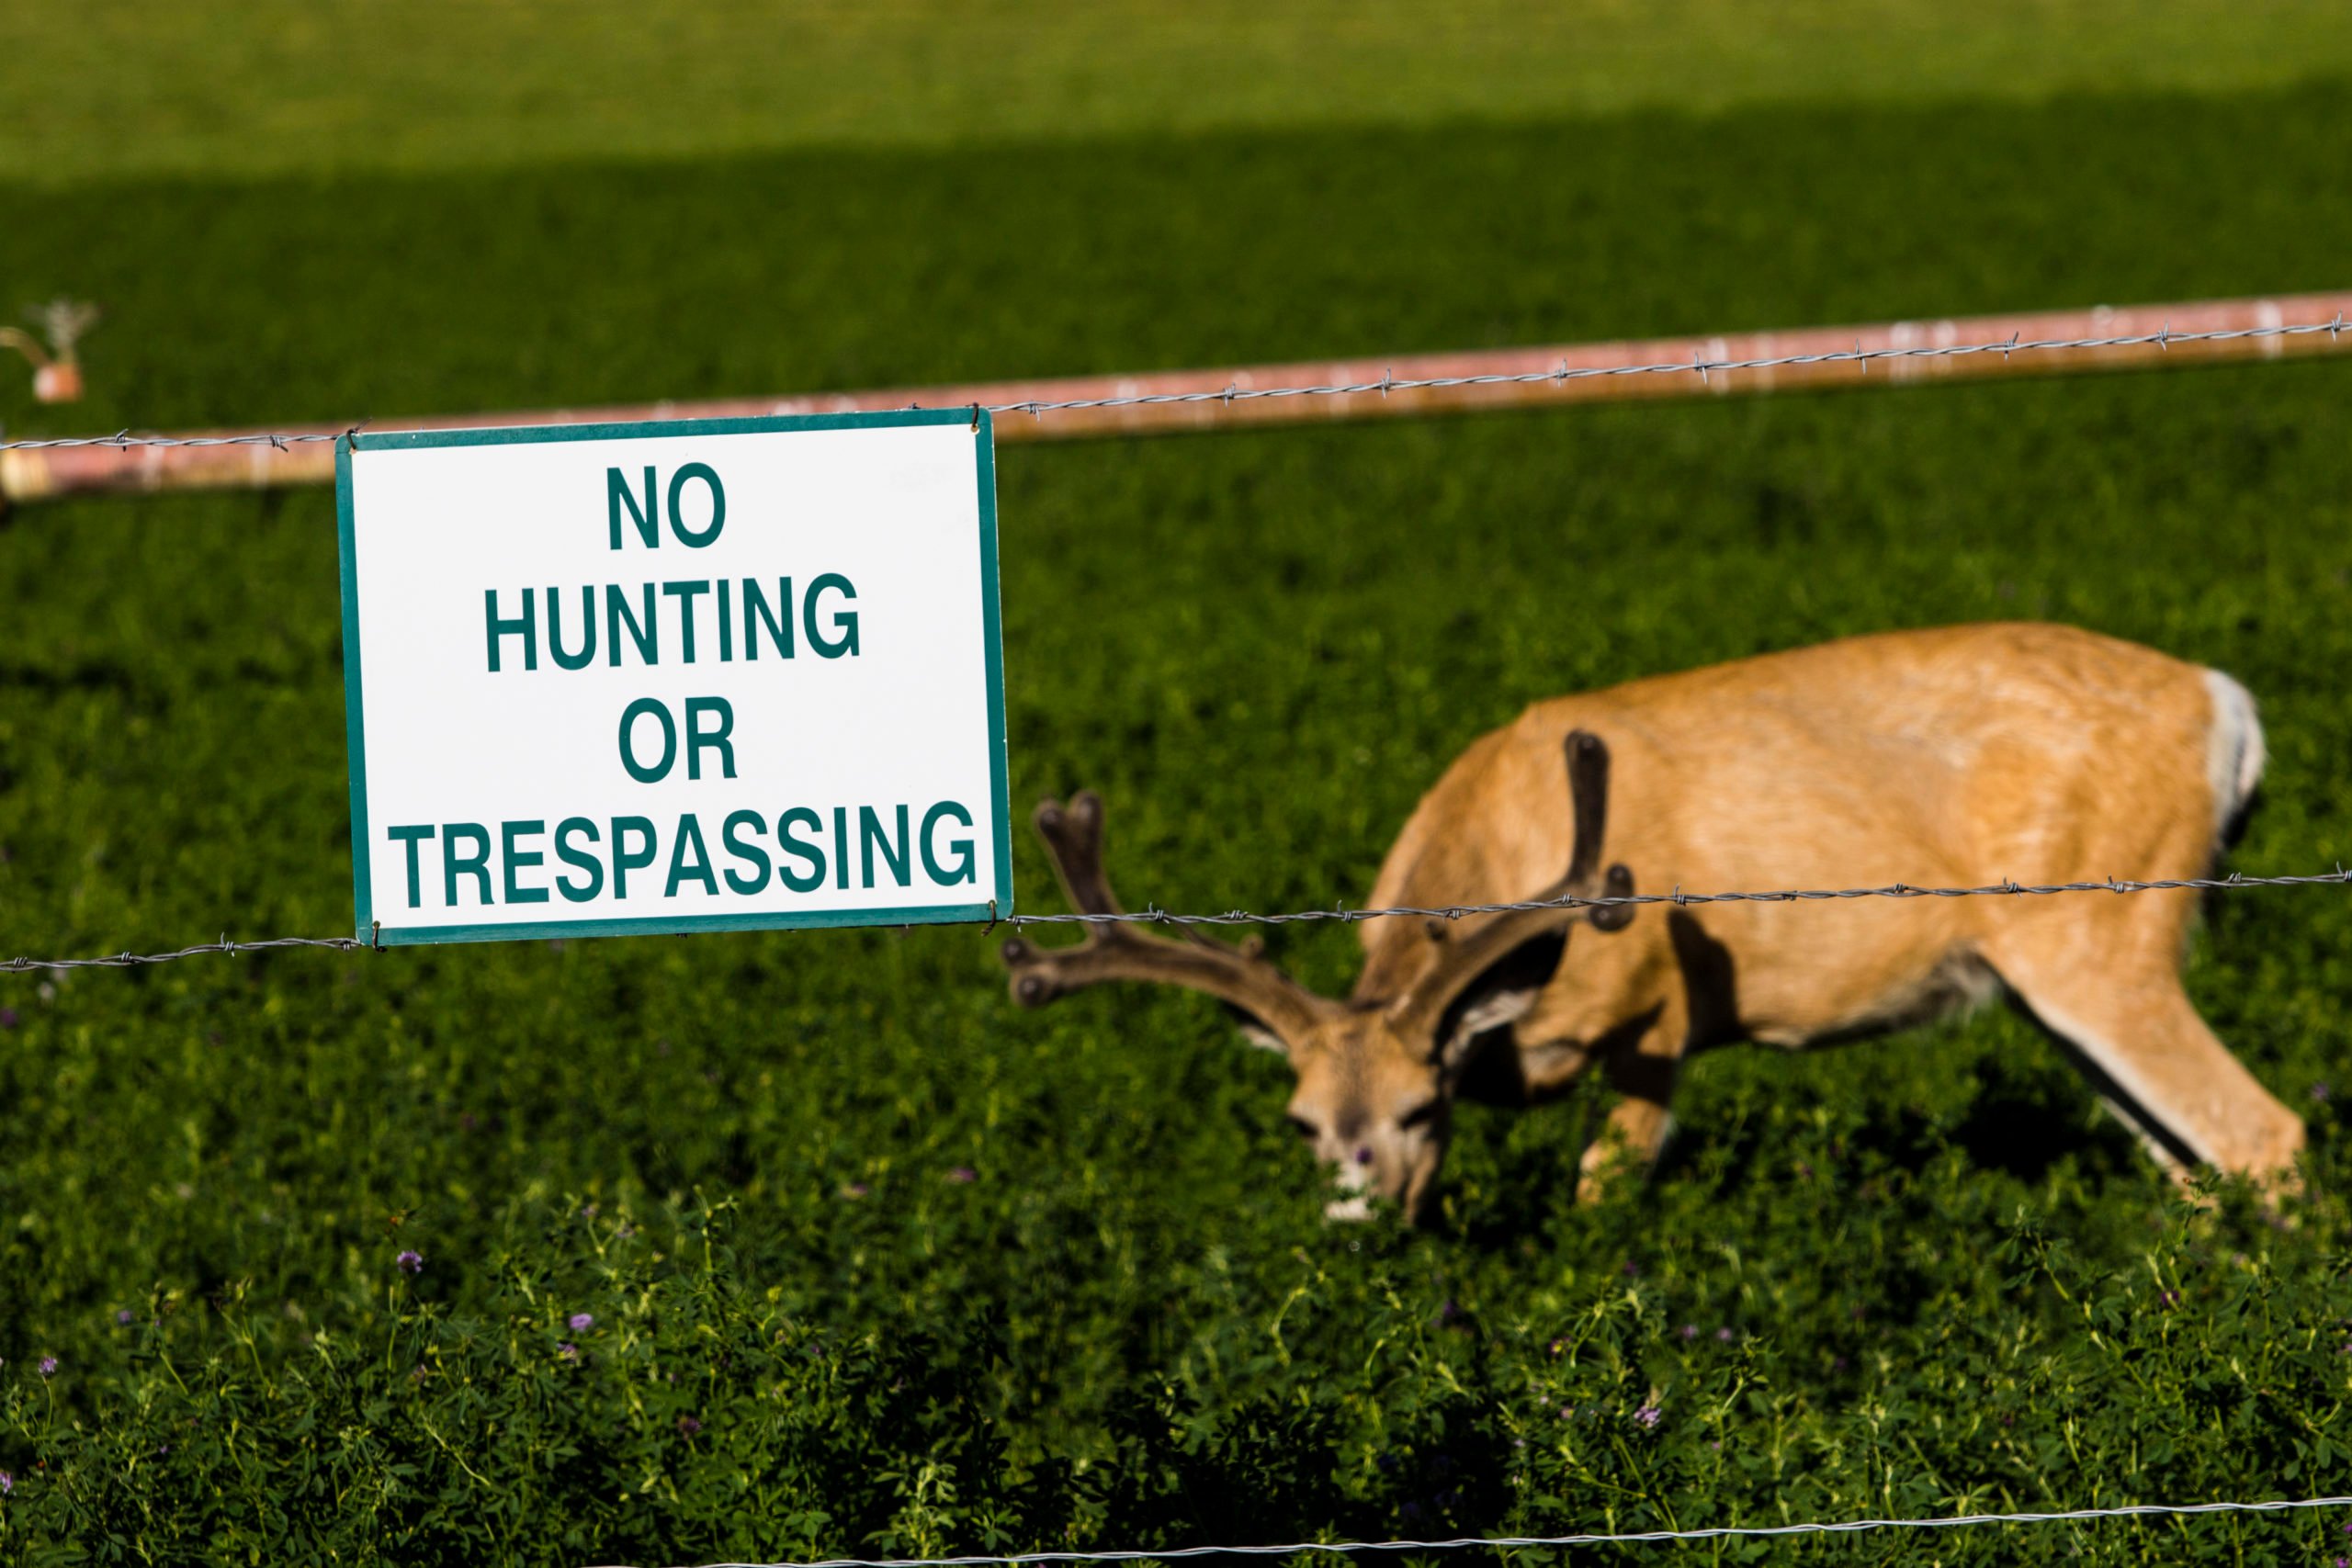 Trespassing Laws